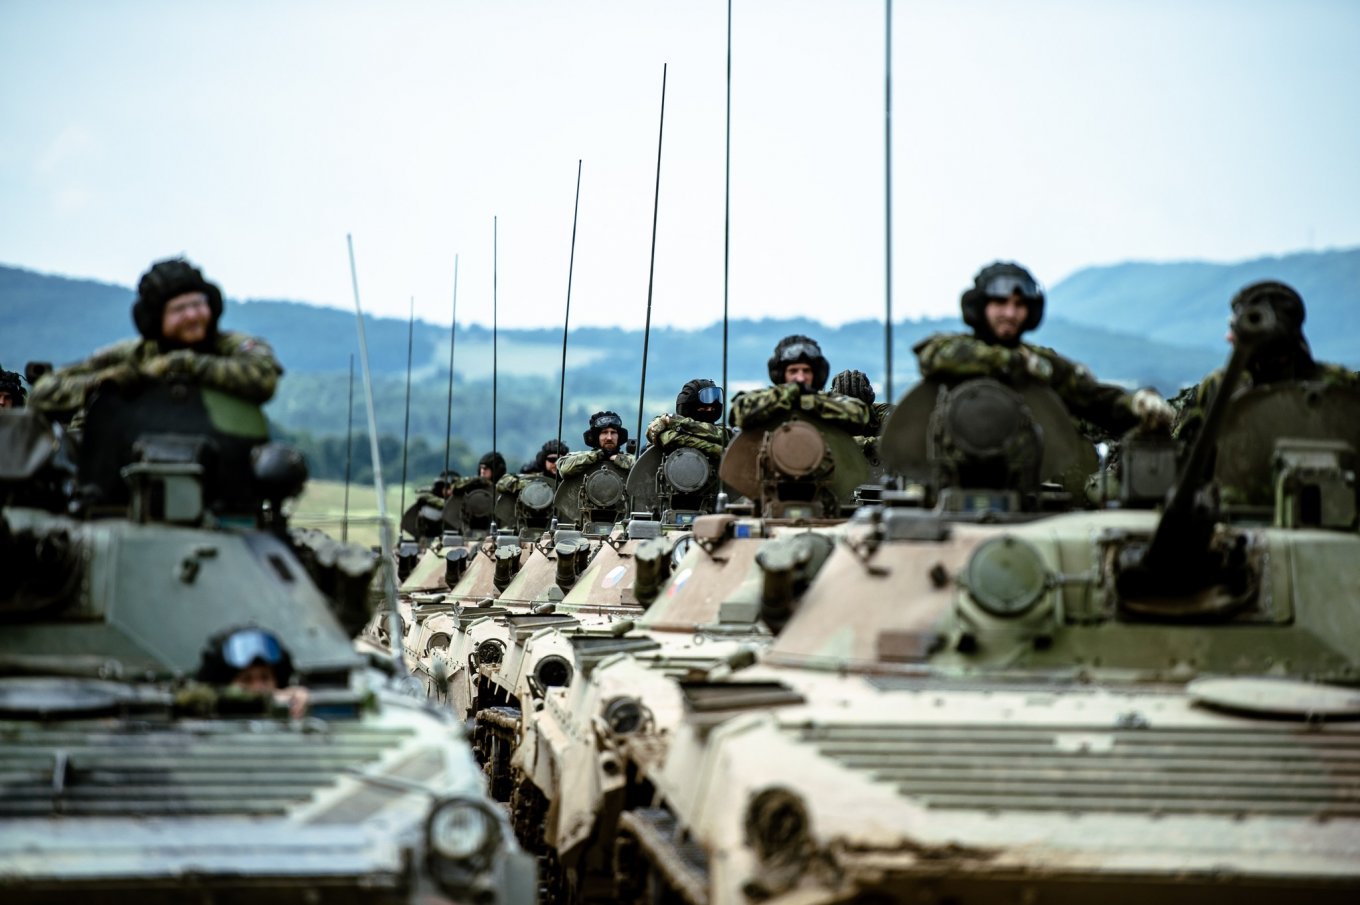 Slovak BMP-1 infantry fighting vehicles